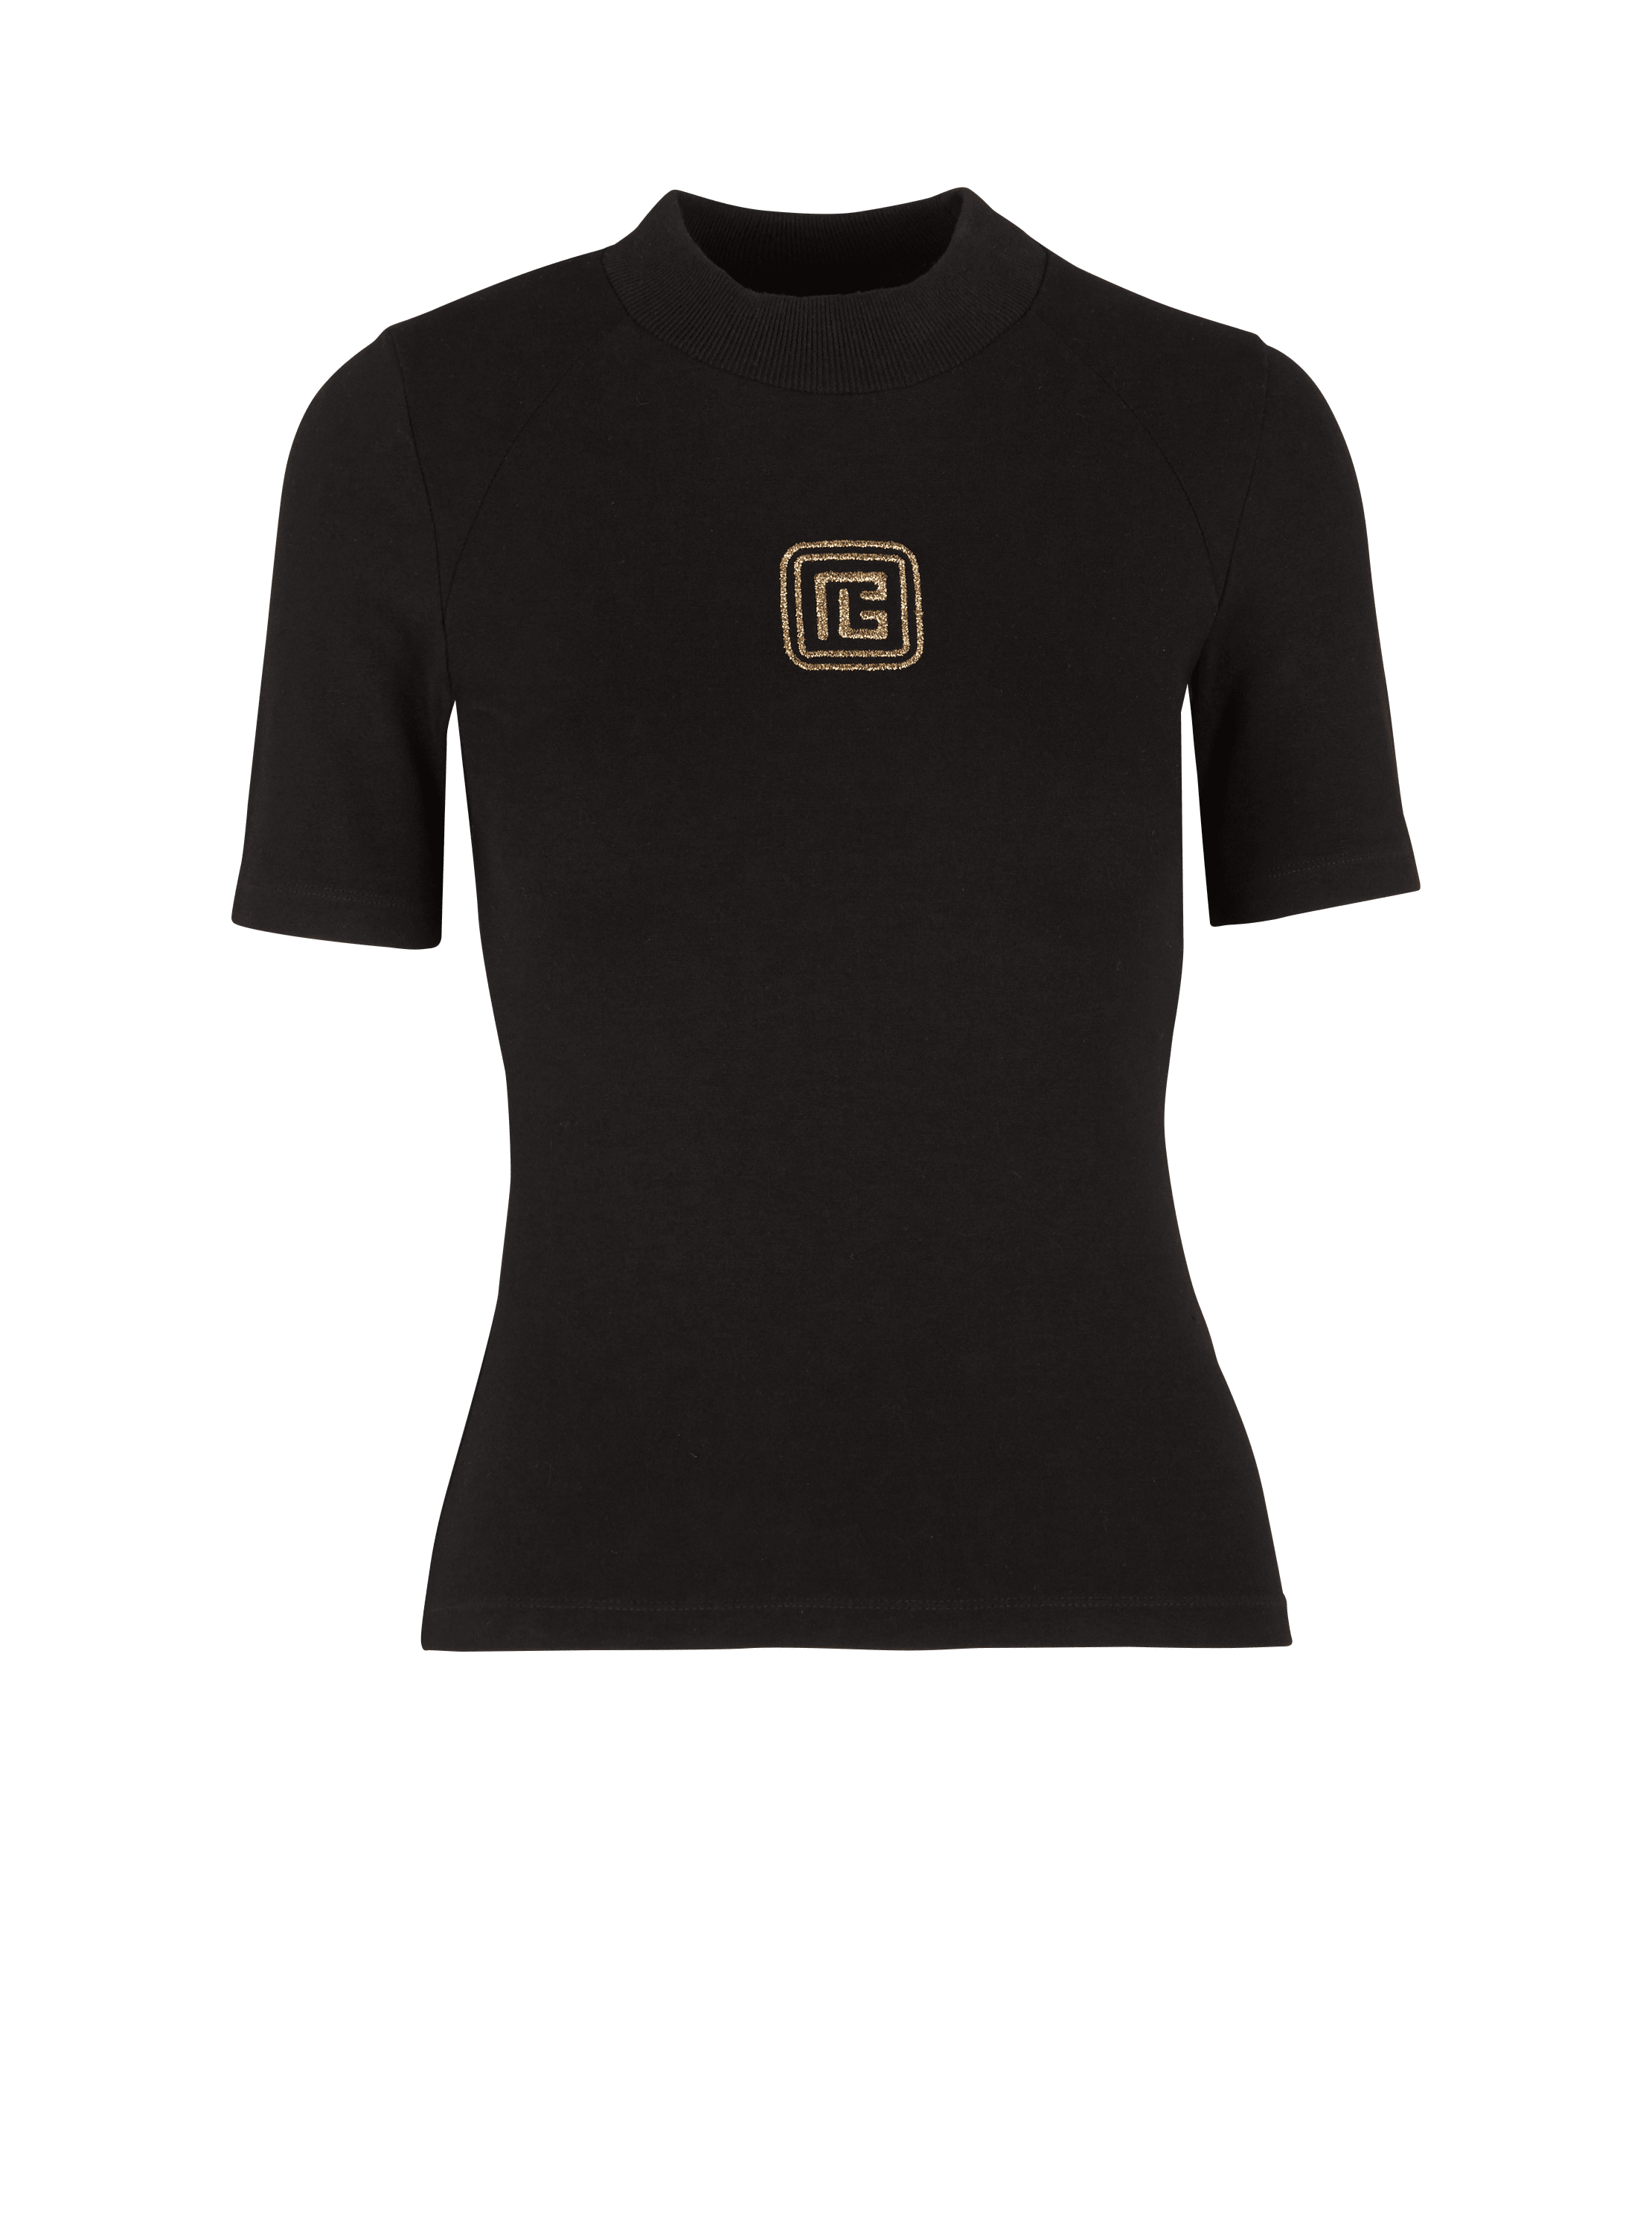 Retro PB T-shirt